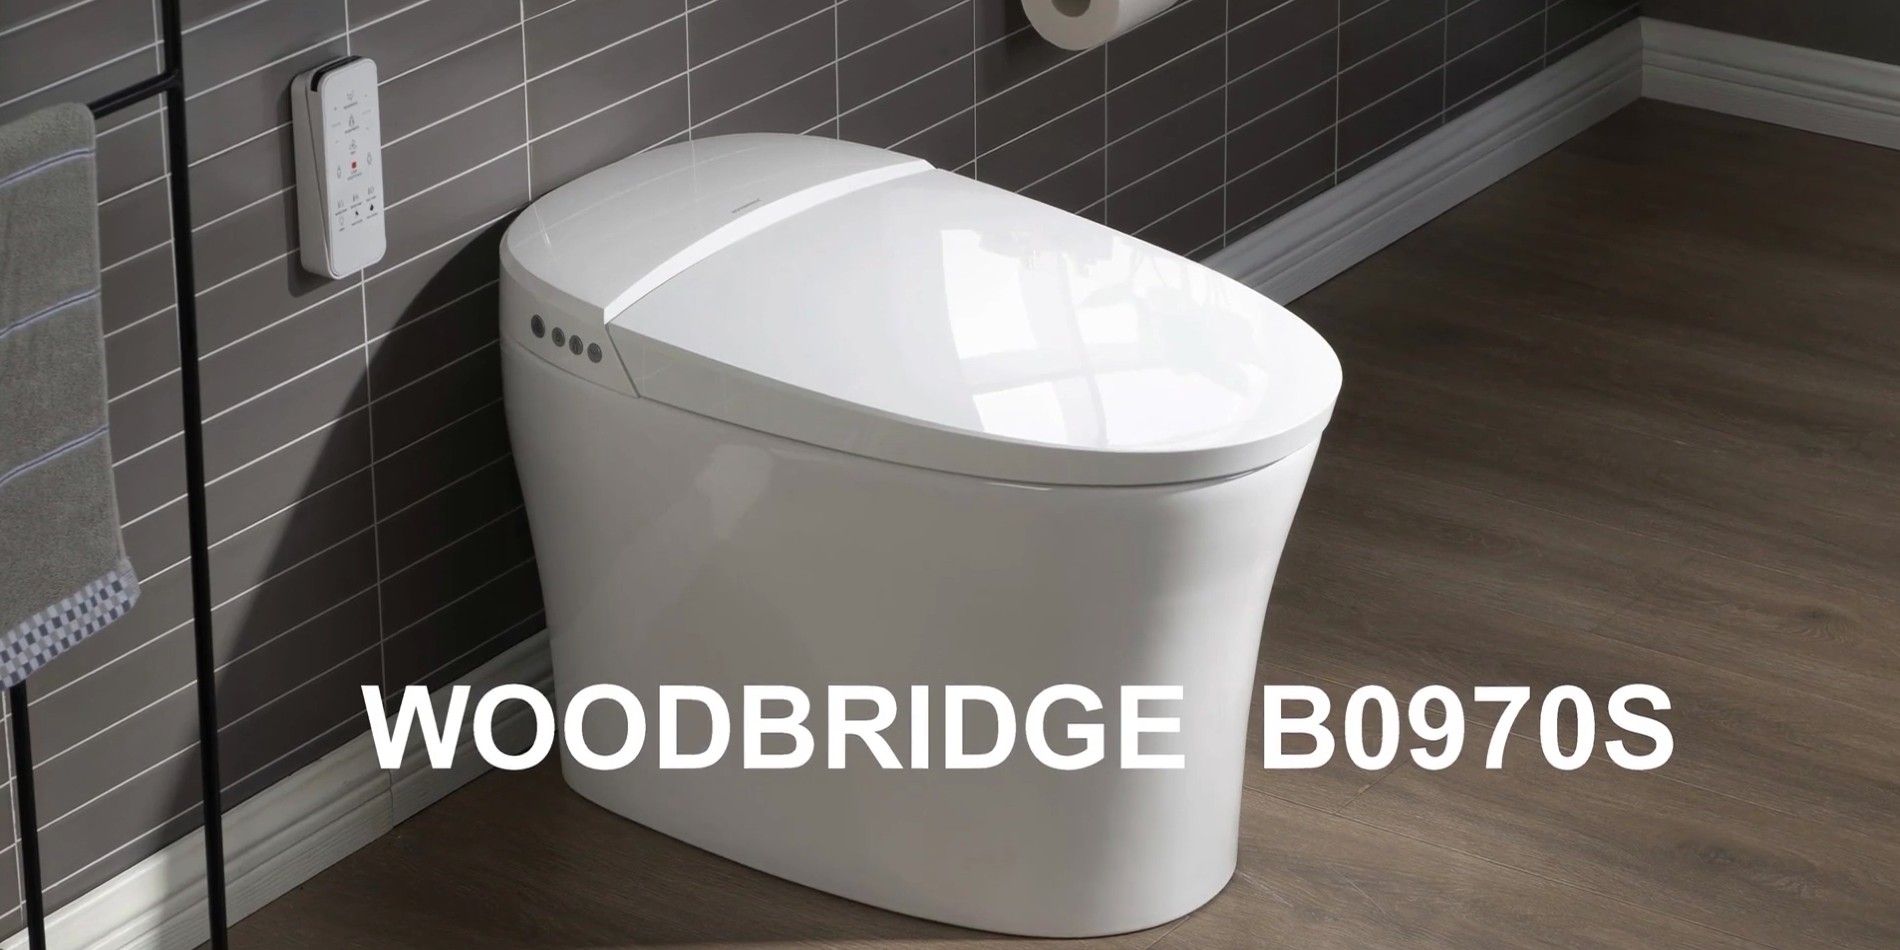 A photo of the Woodbridge B0970S in a bathroom